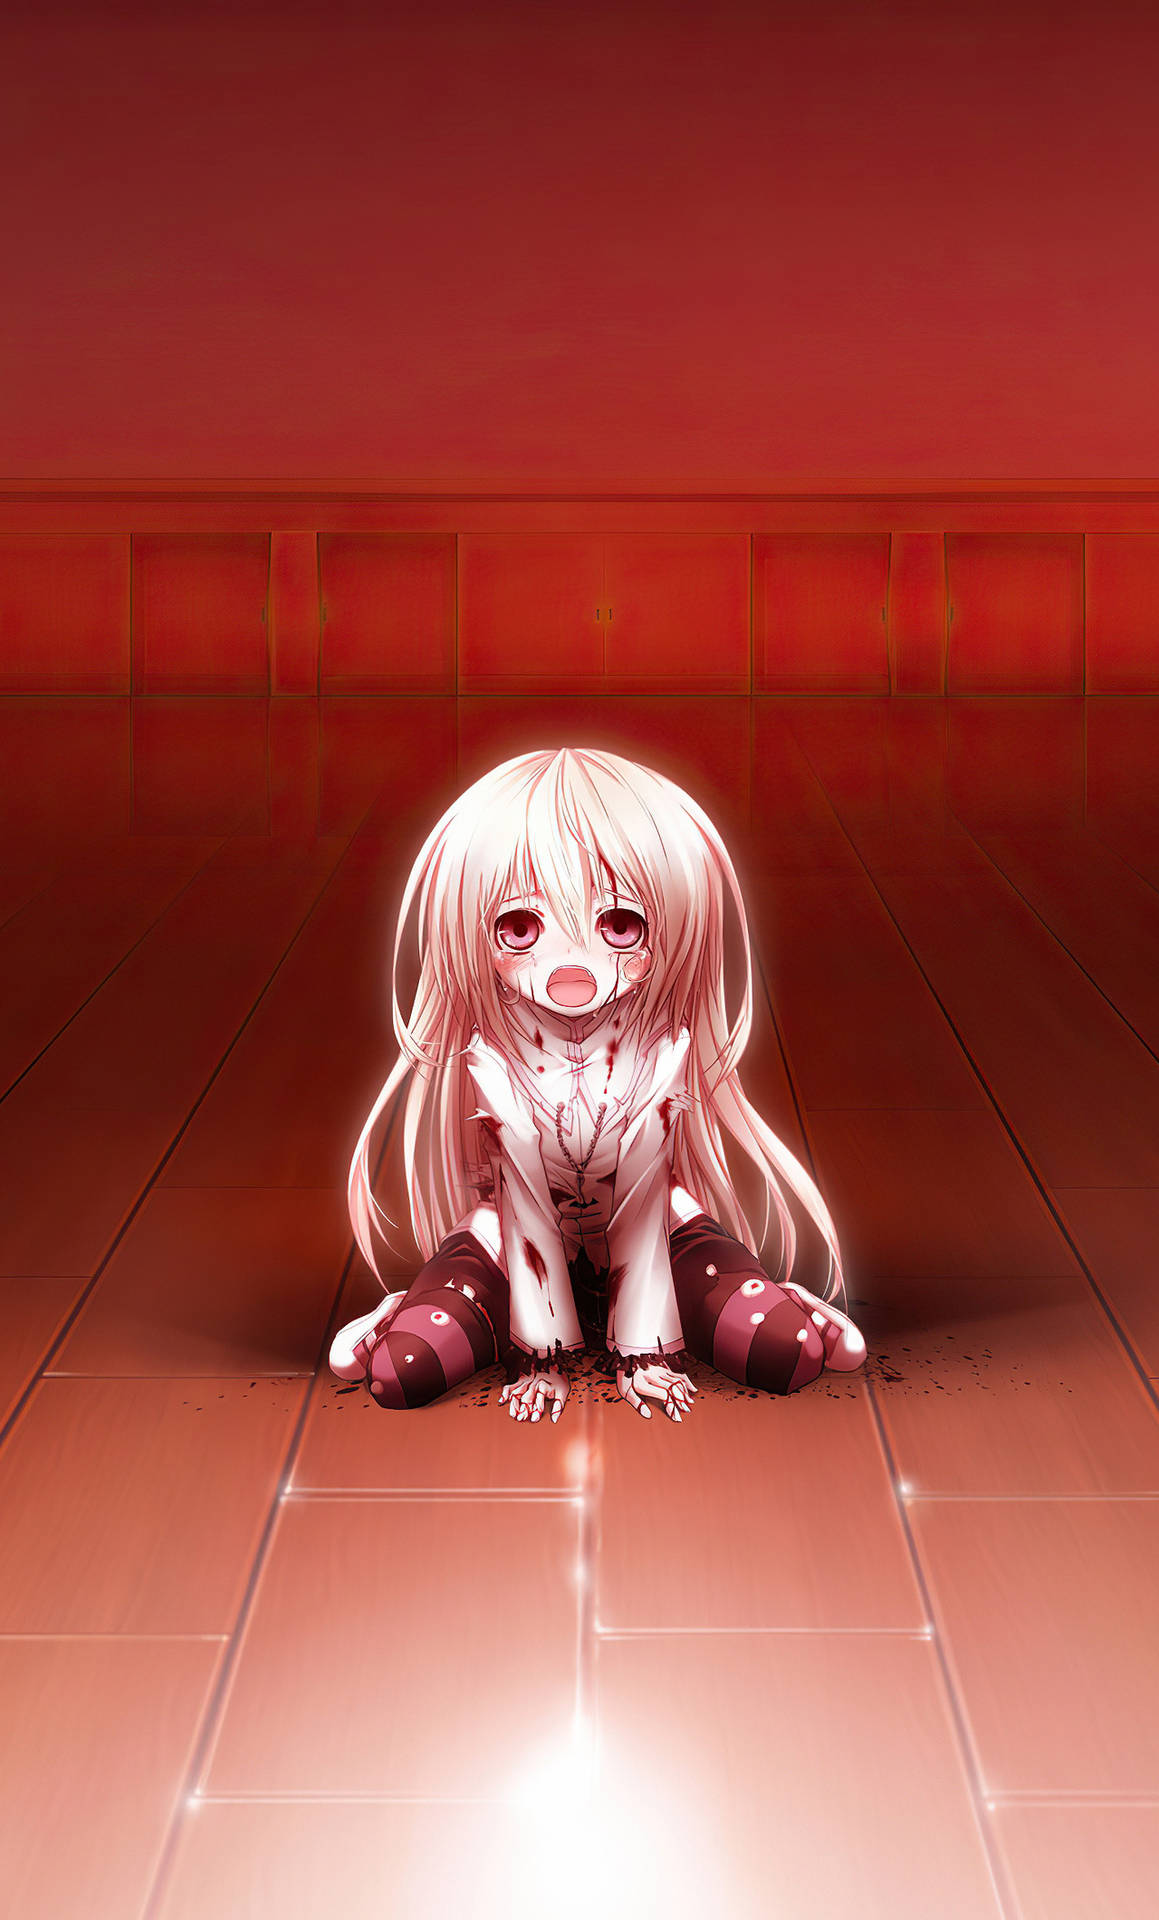 En pige sidder på gulvet med et lys, der skinner på hende. Wallpaper